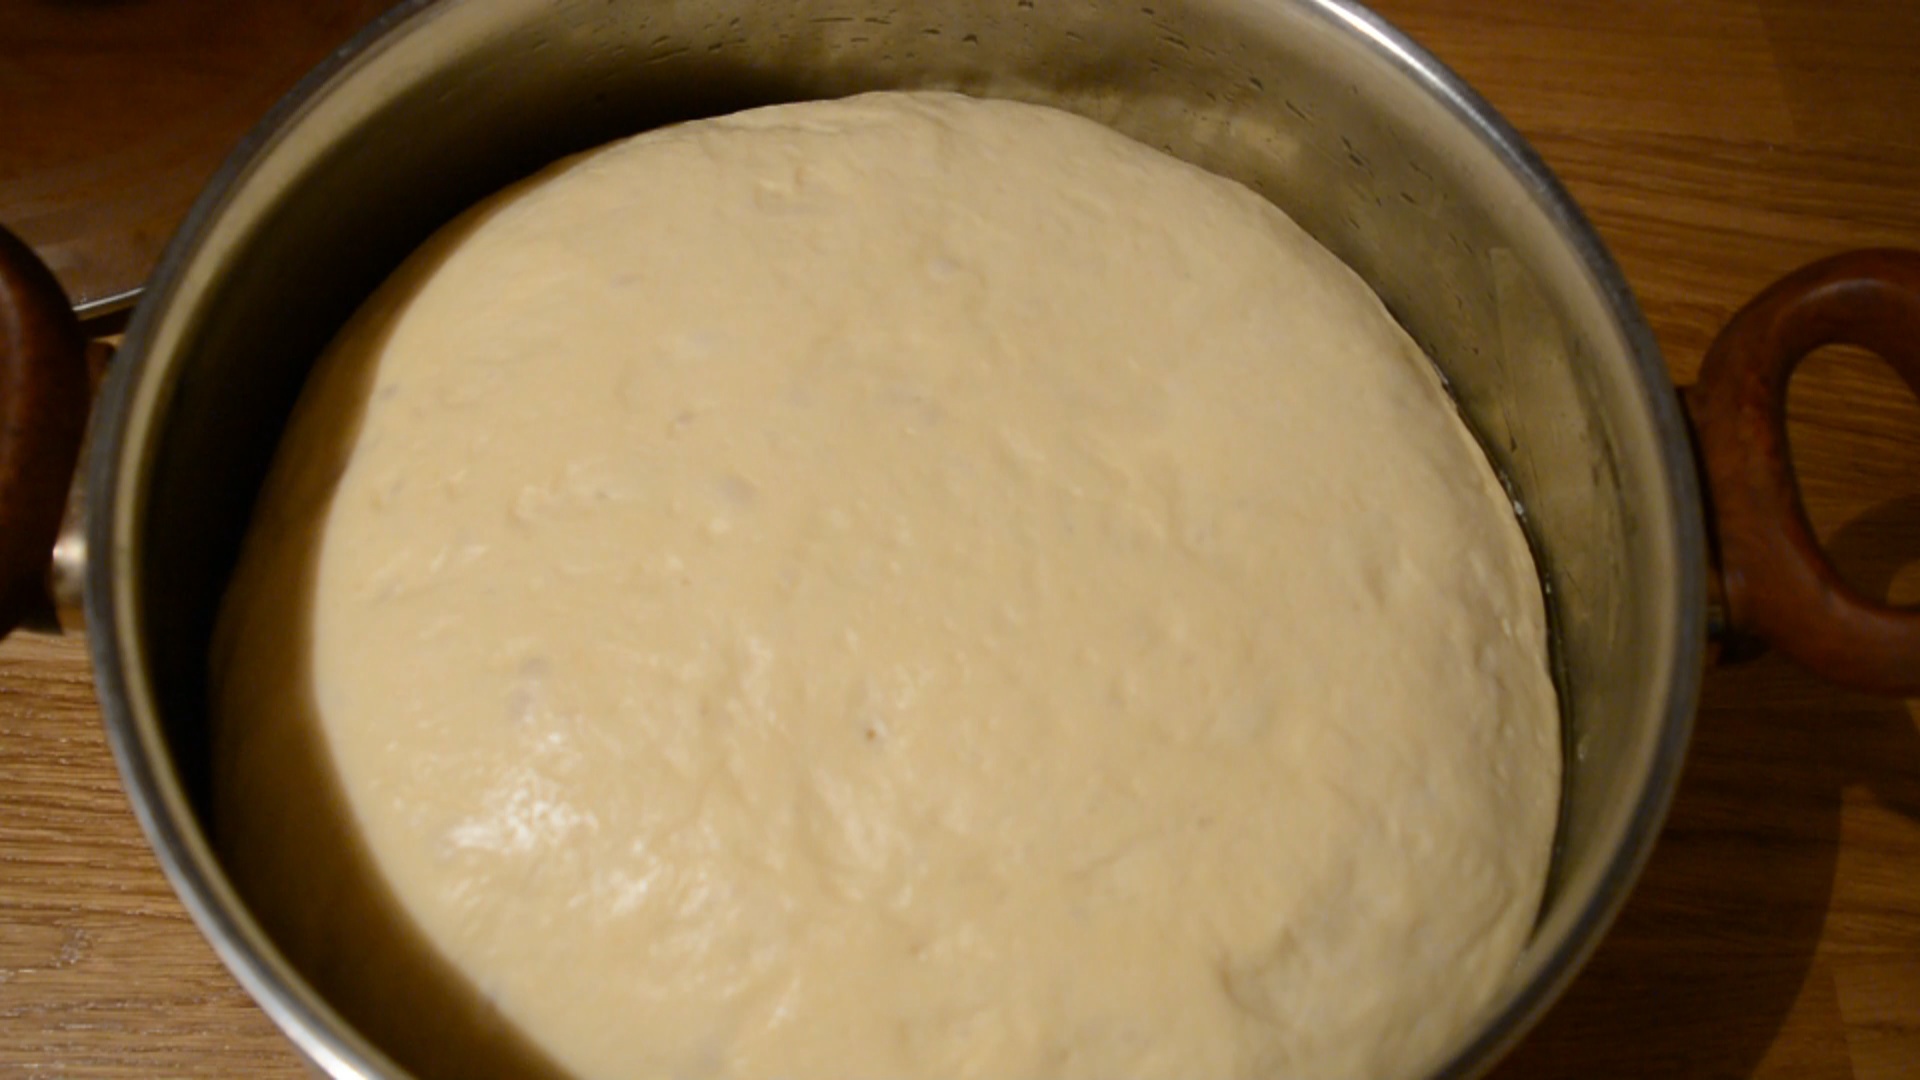 Хранение дрожжевого теста. Как разморозить тесто дрожжевое. Можно замораживать дрожжевое тесто. Как разморозить тесто правильно. Как правильно заморозить дрожжевое тесто.